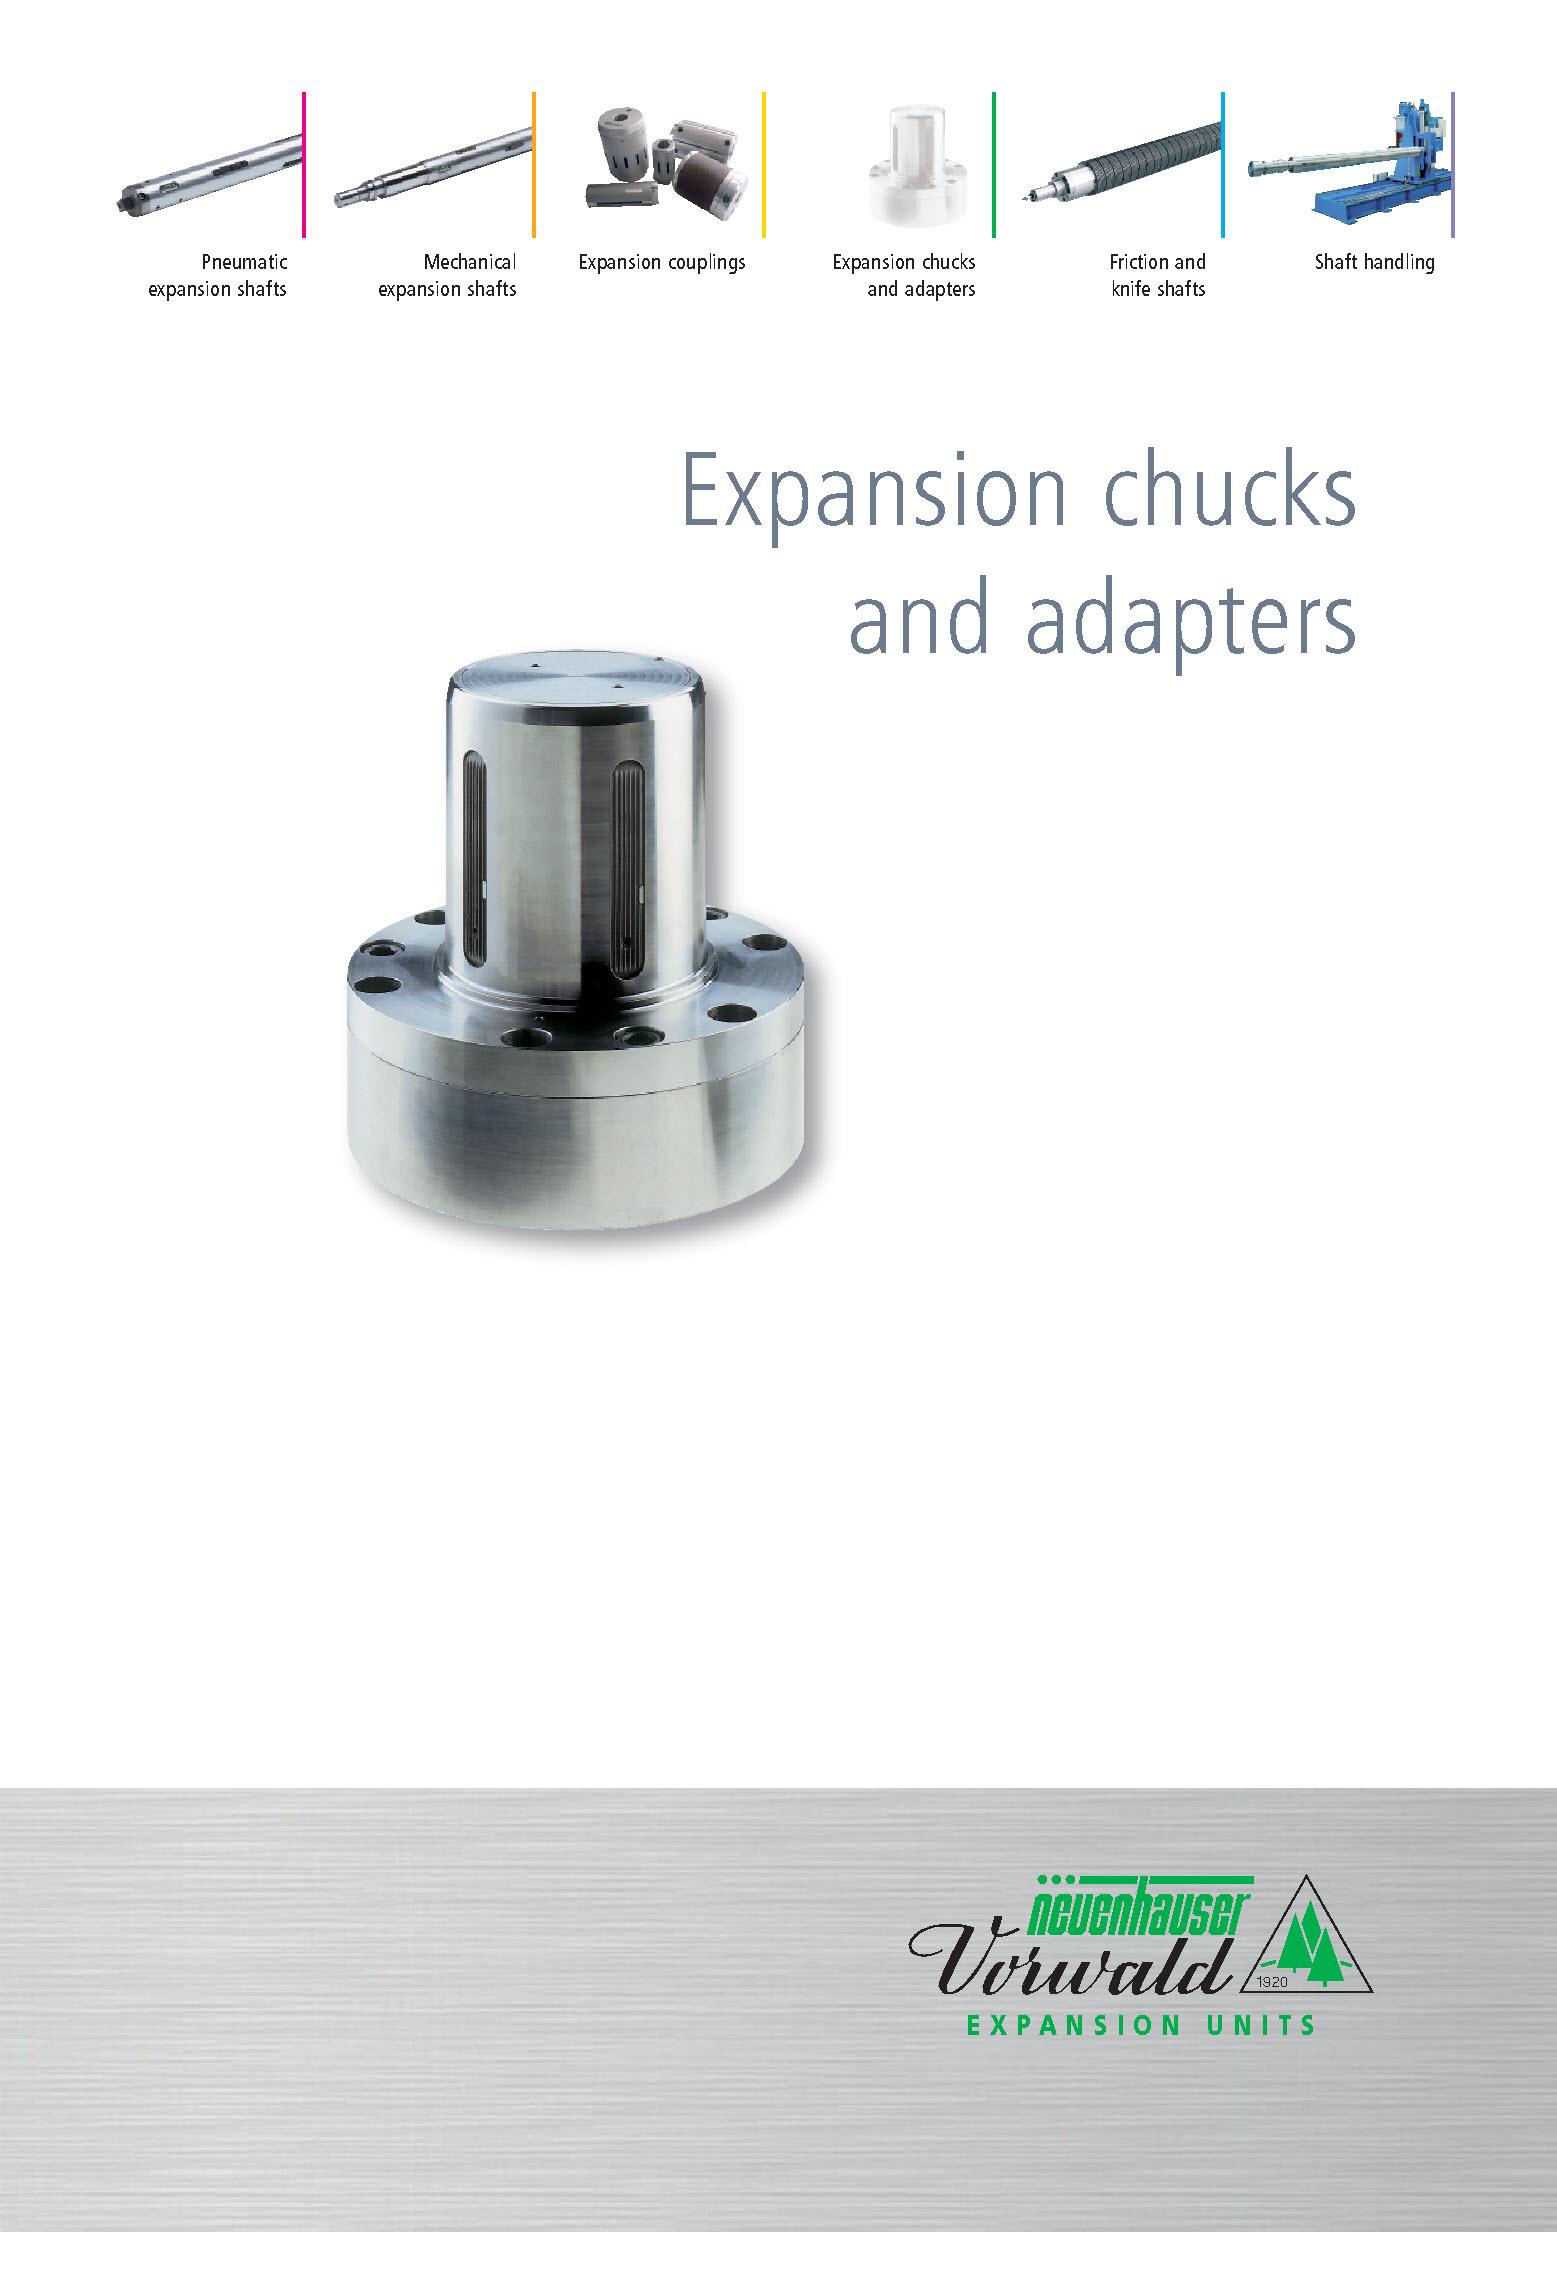 Vorwald Expansion chucks and adapters EN